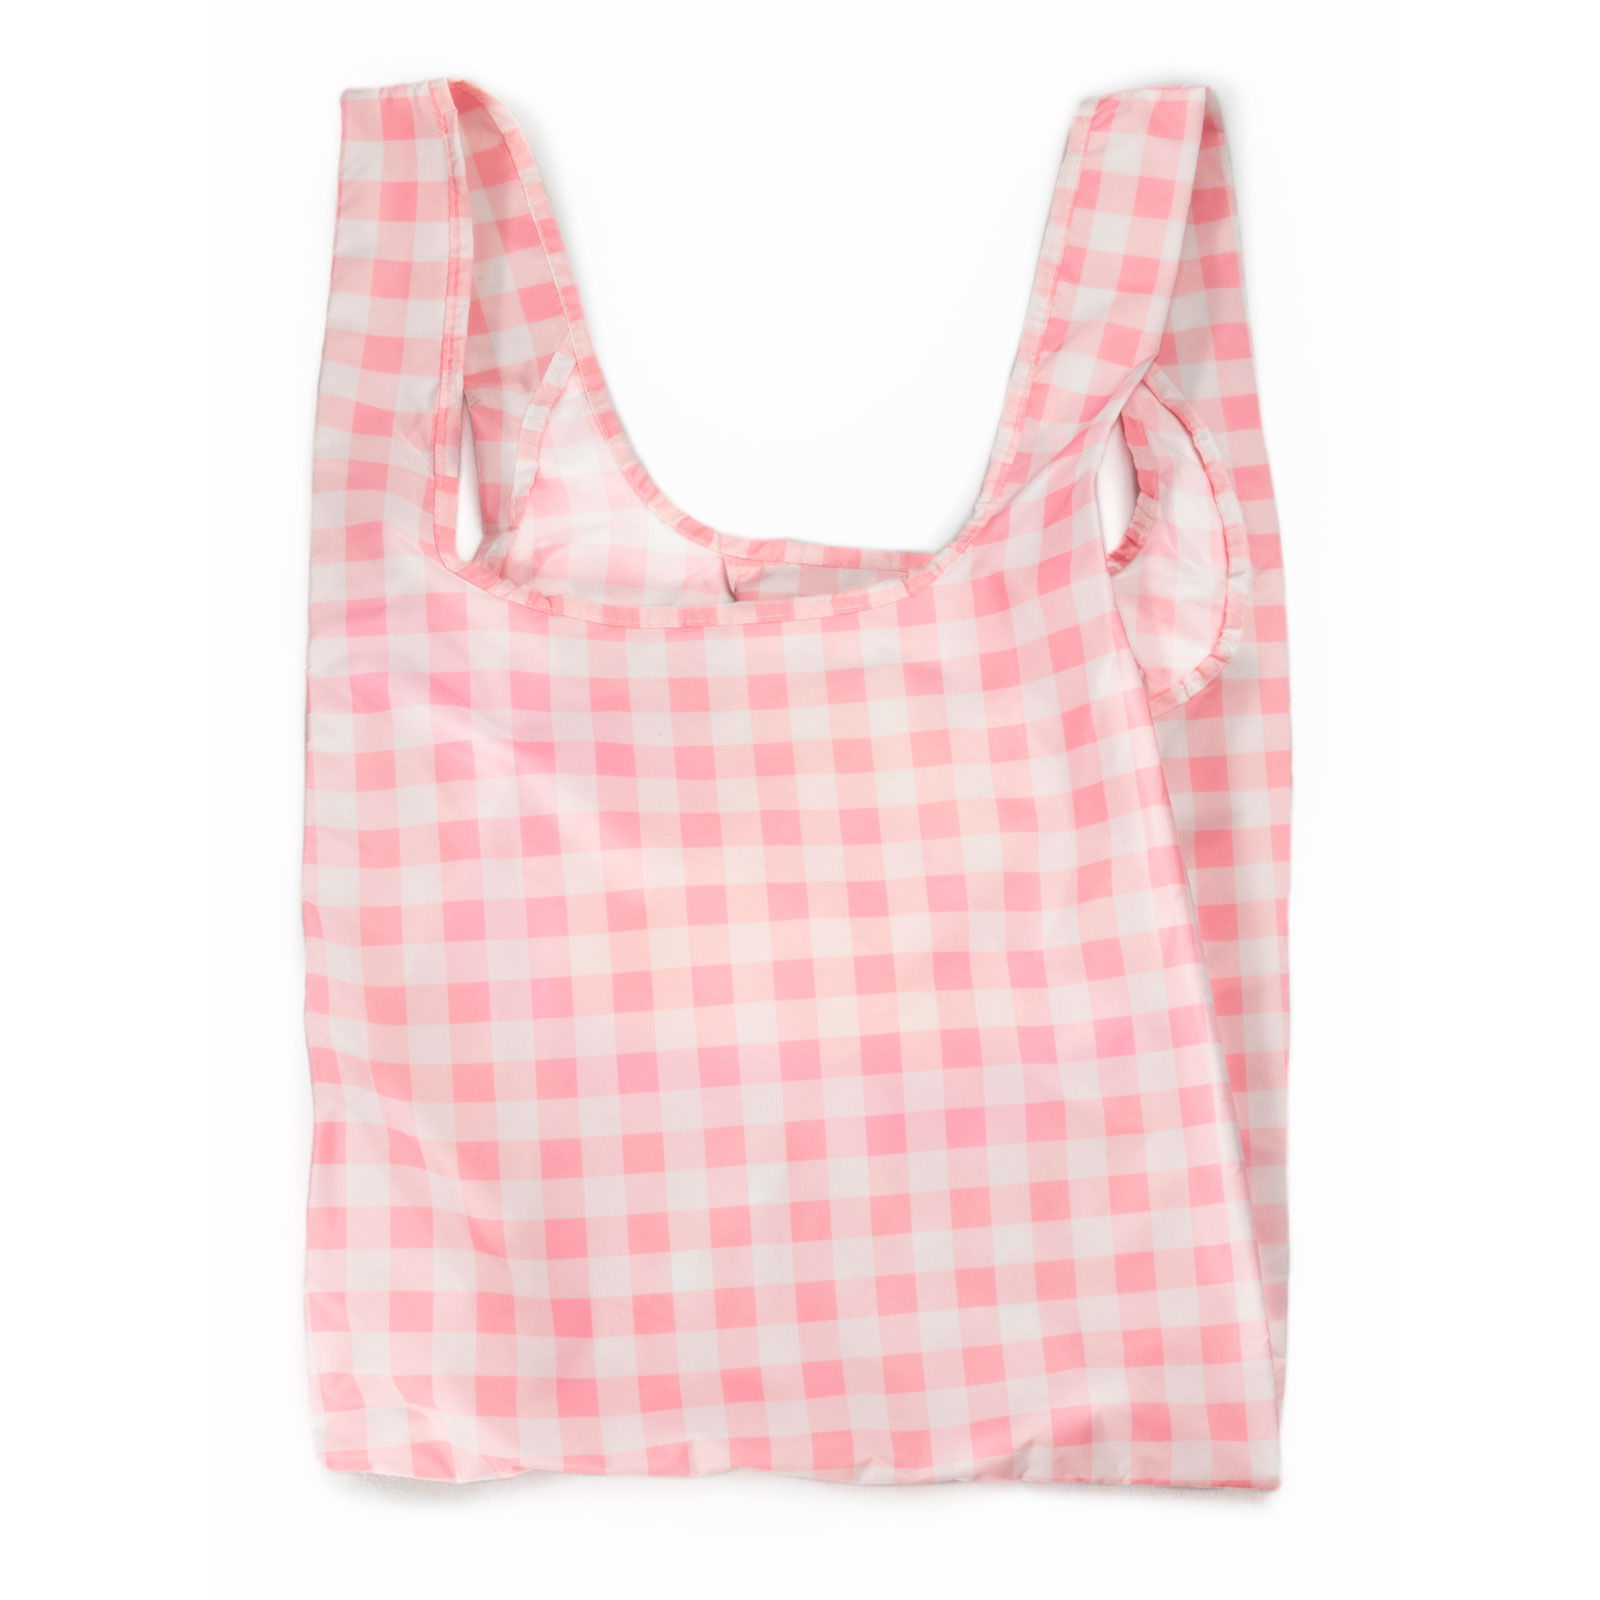 Medium Bag Pink Gingham 